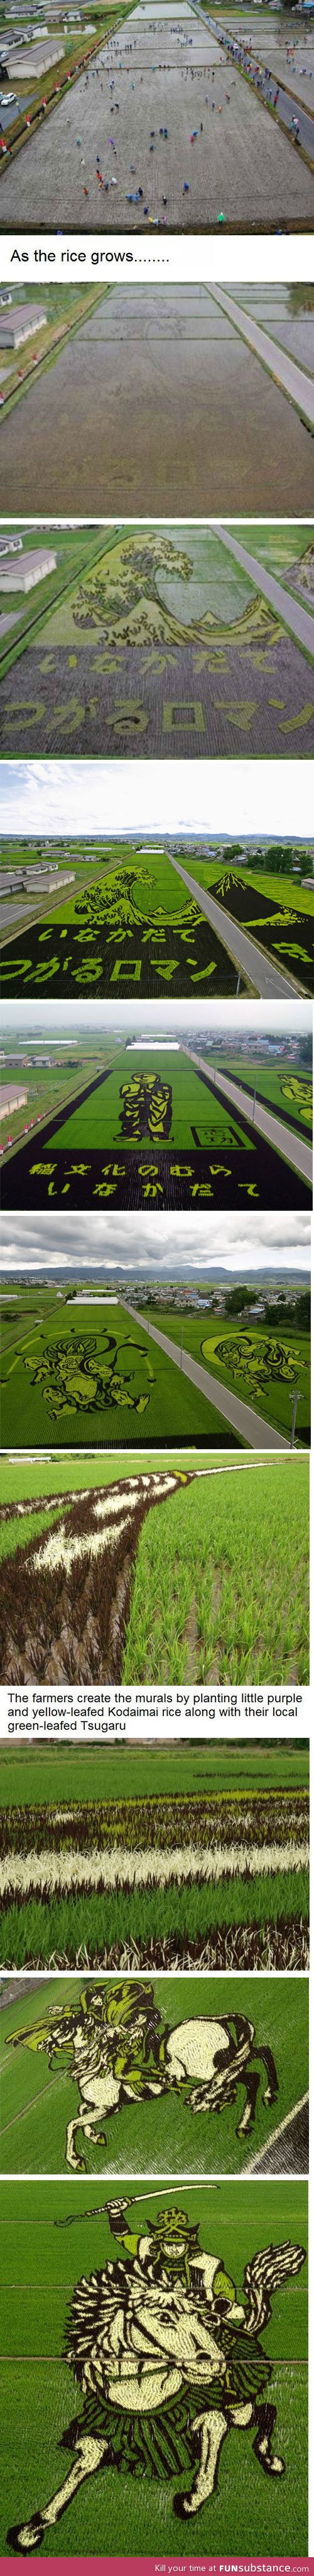 Rice field paintings